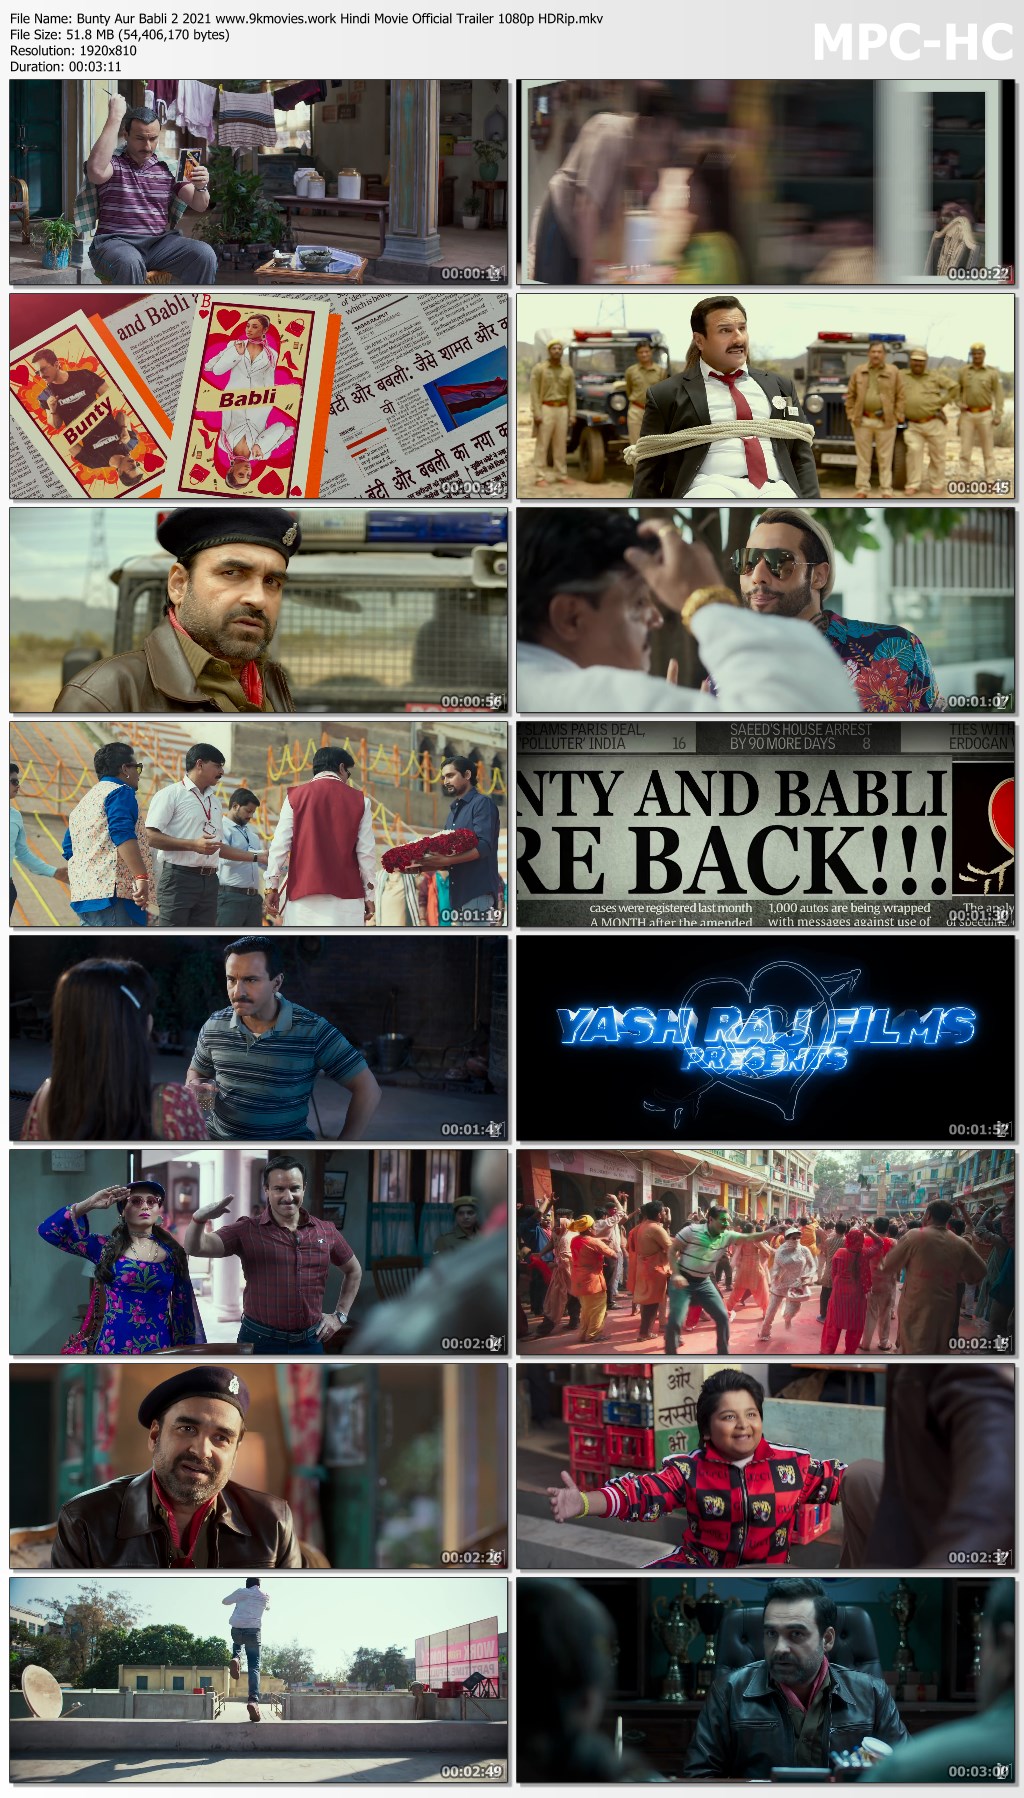 Bunty Aur Babli 2 2021 www.9kmovies.work Hindi Movie Official Trailer 1080p HDRip.mkv thumbsf704b9b701790e66